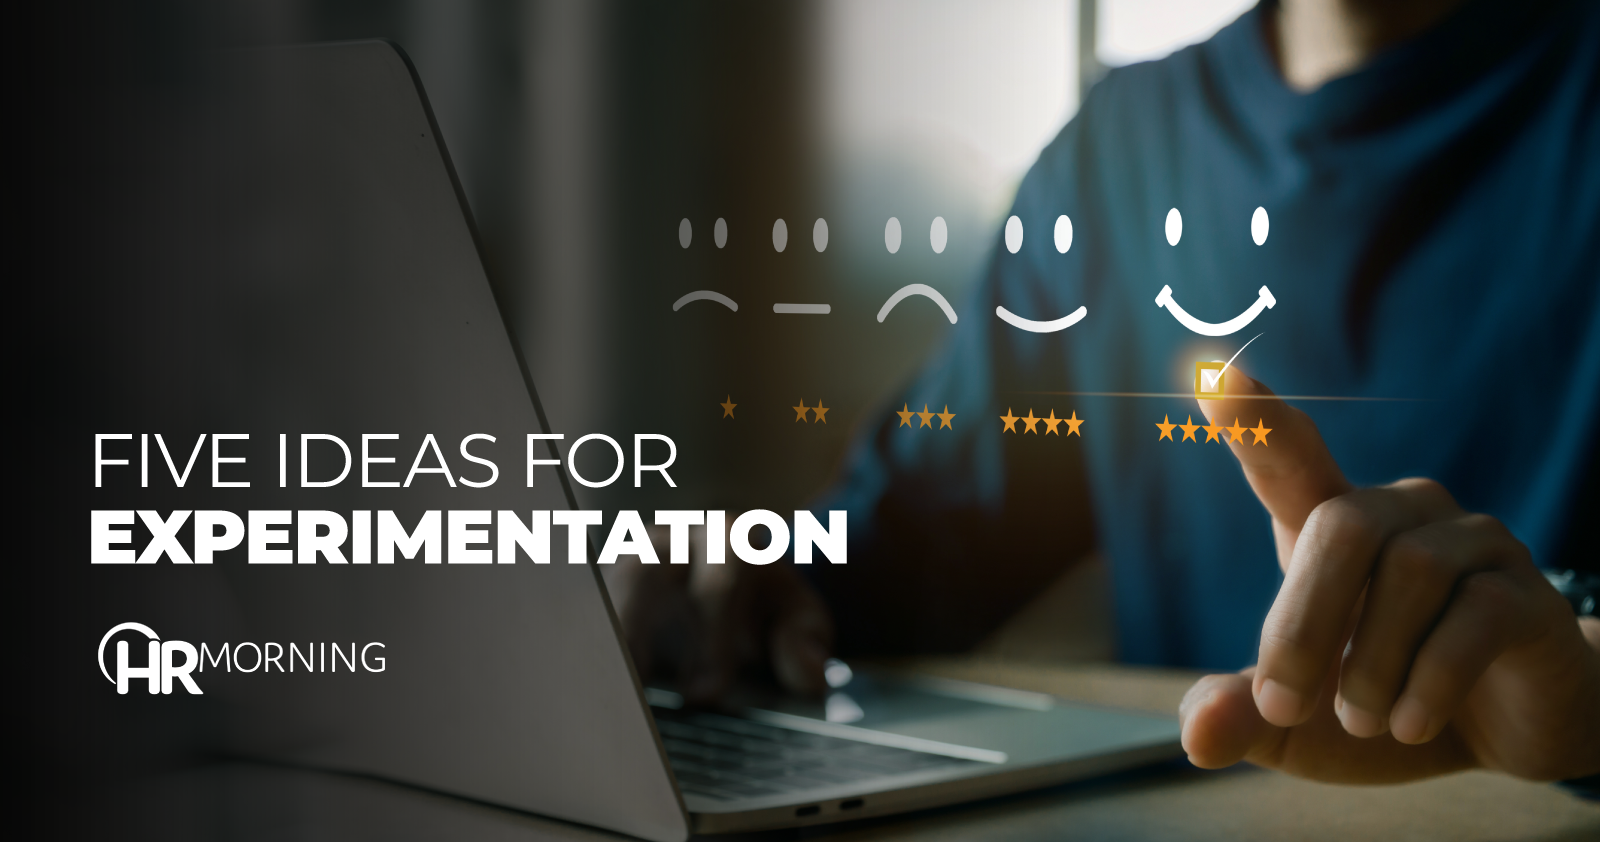 Five ideas for experimentation